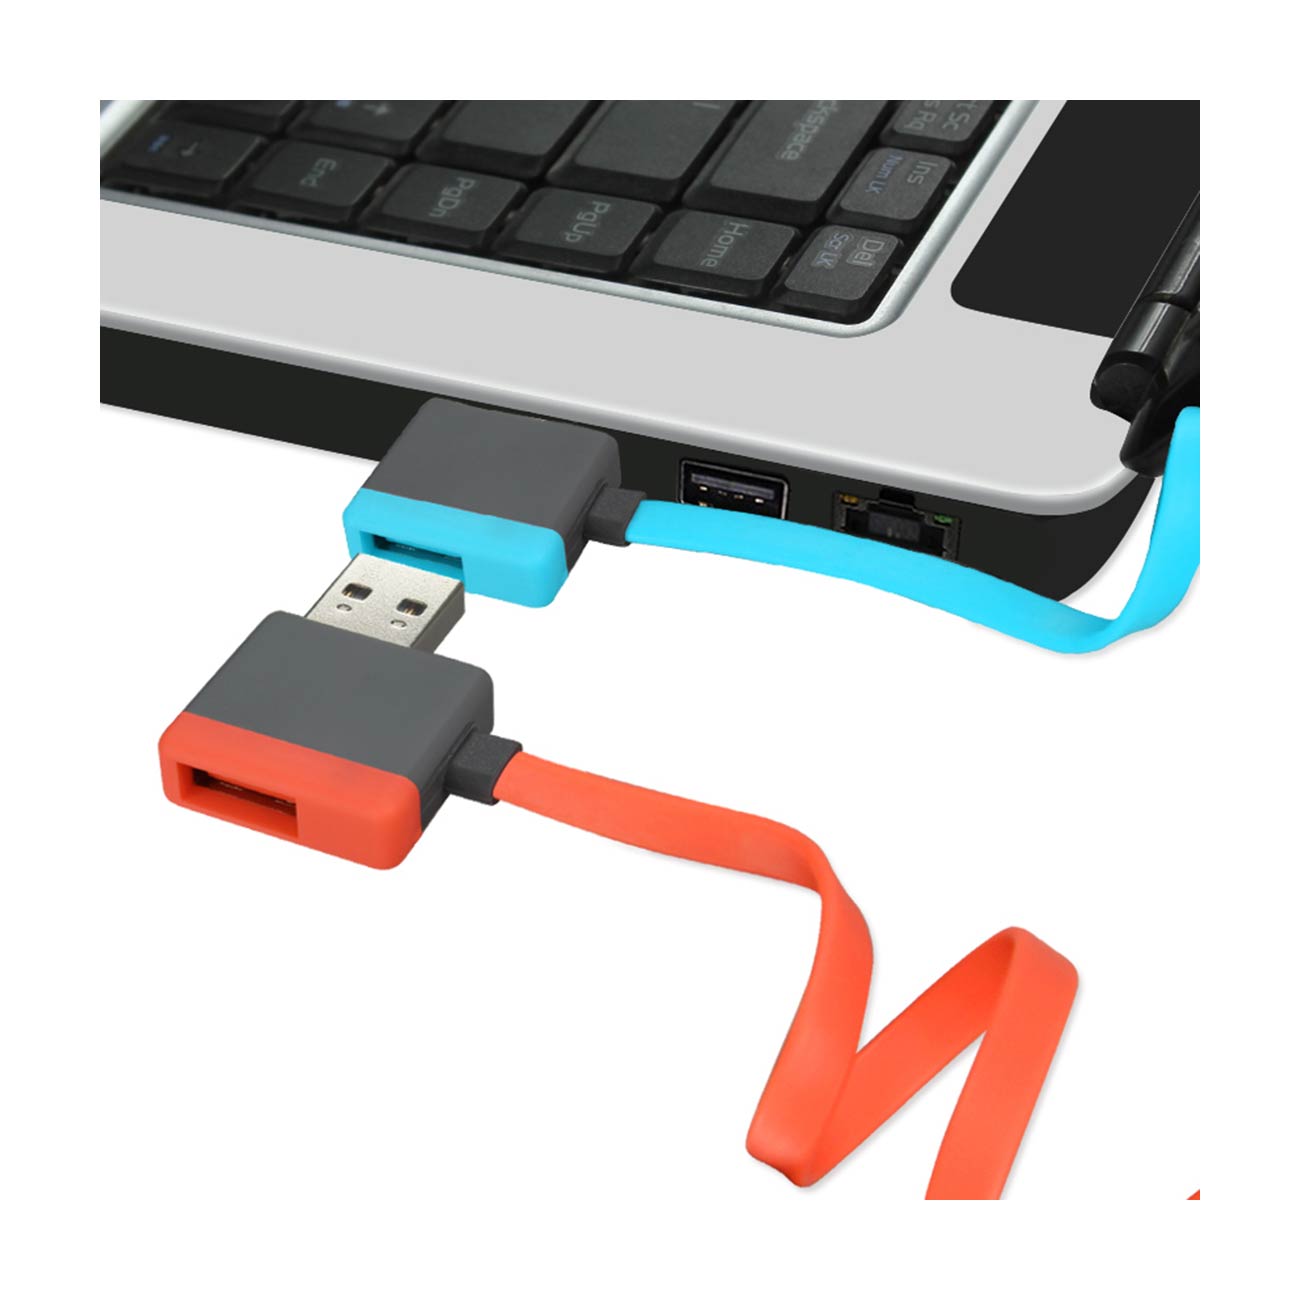 Cable USB Micro Piggyback Flat Liberator 3.2Ft Blue Color